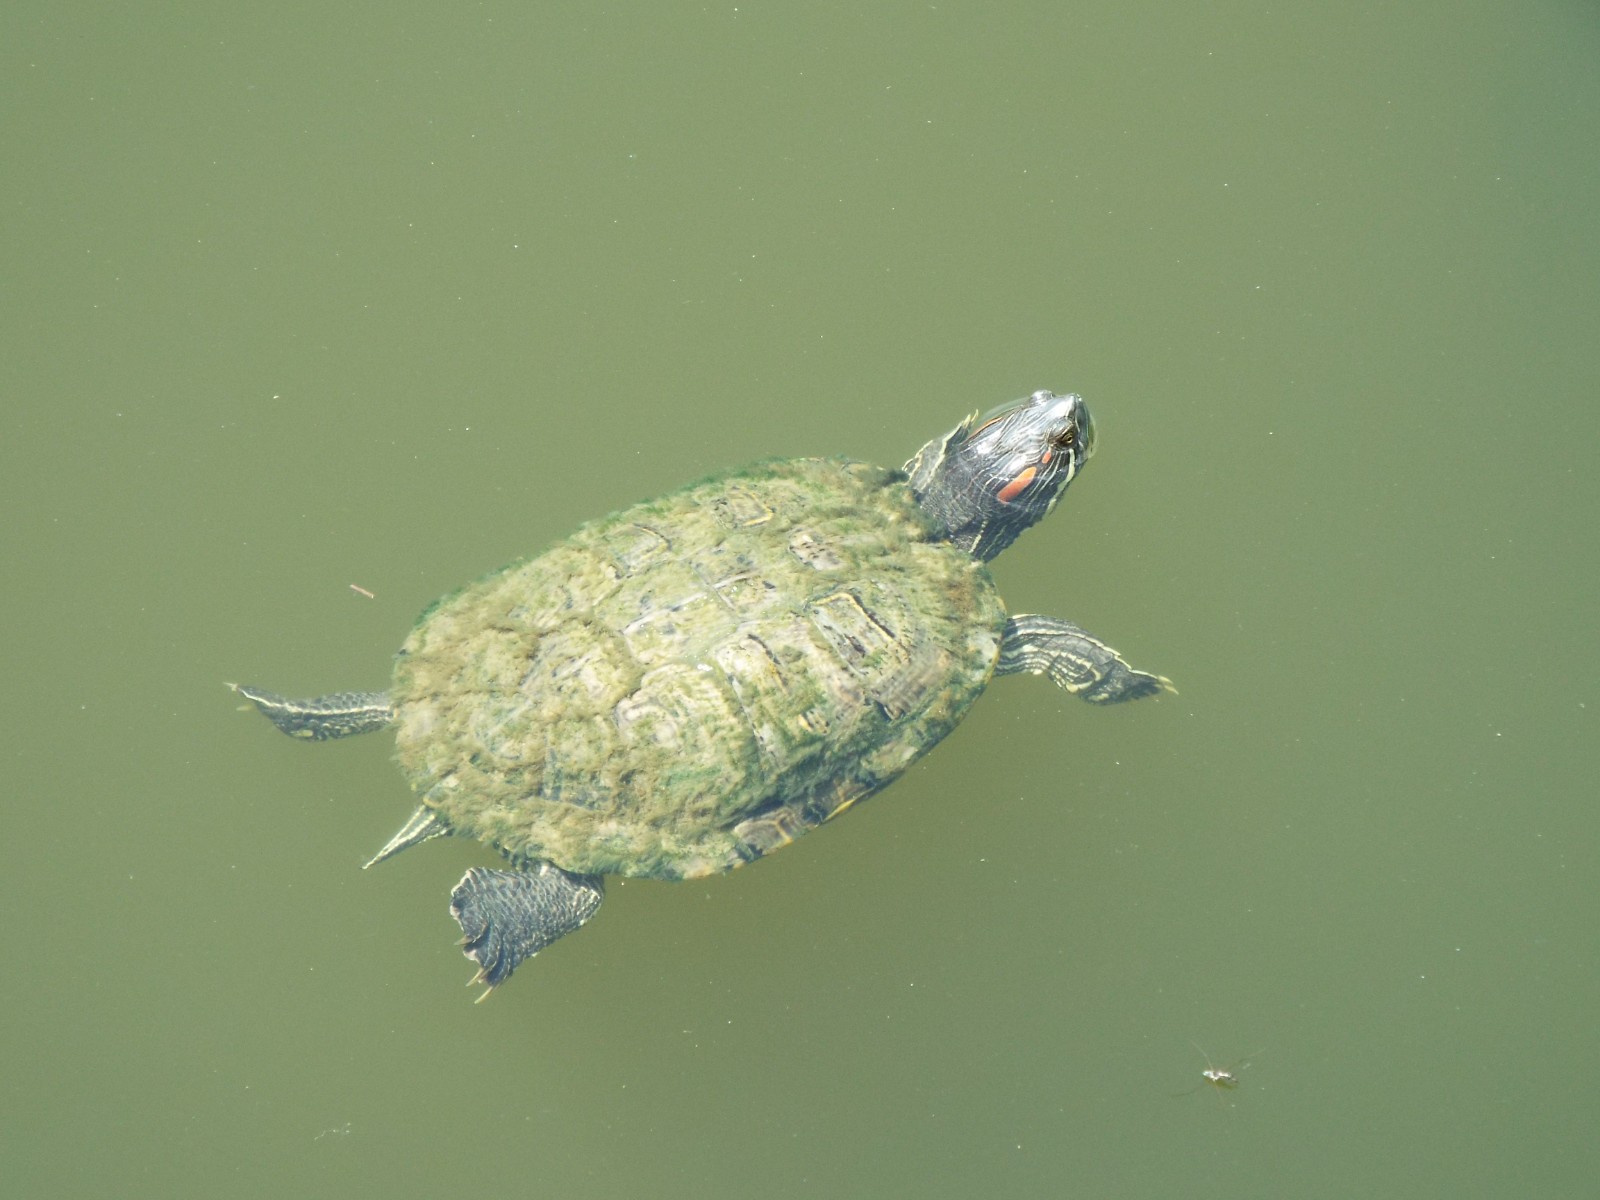 Floating Turtle